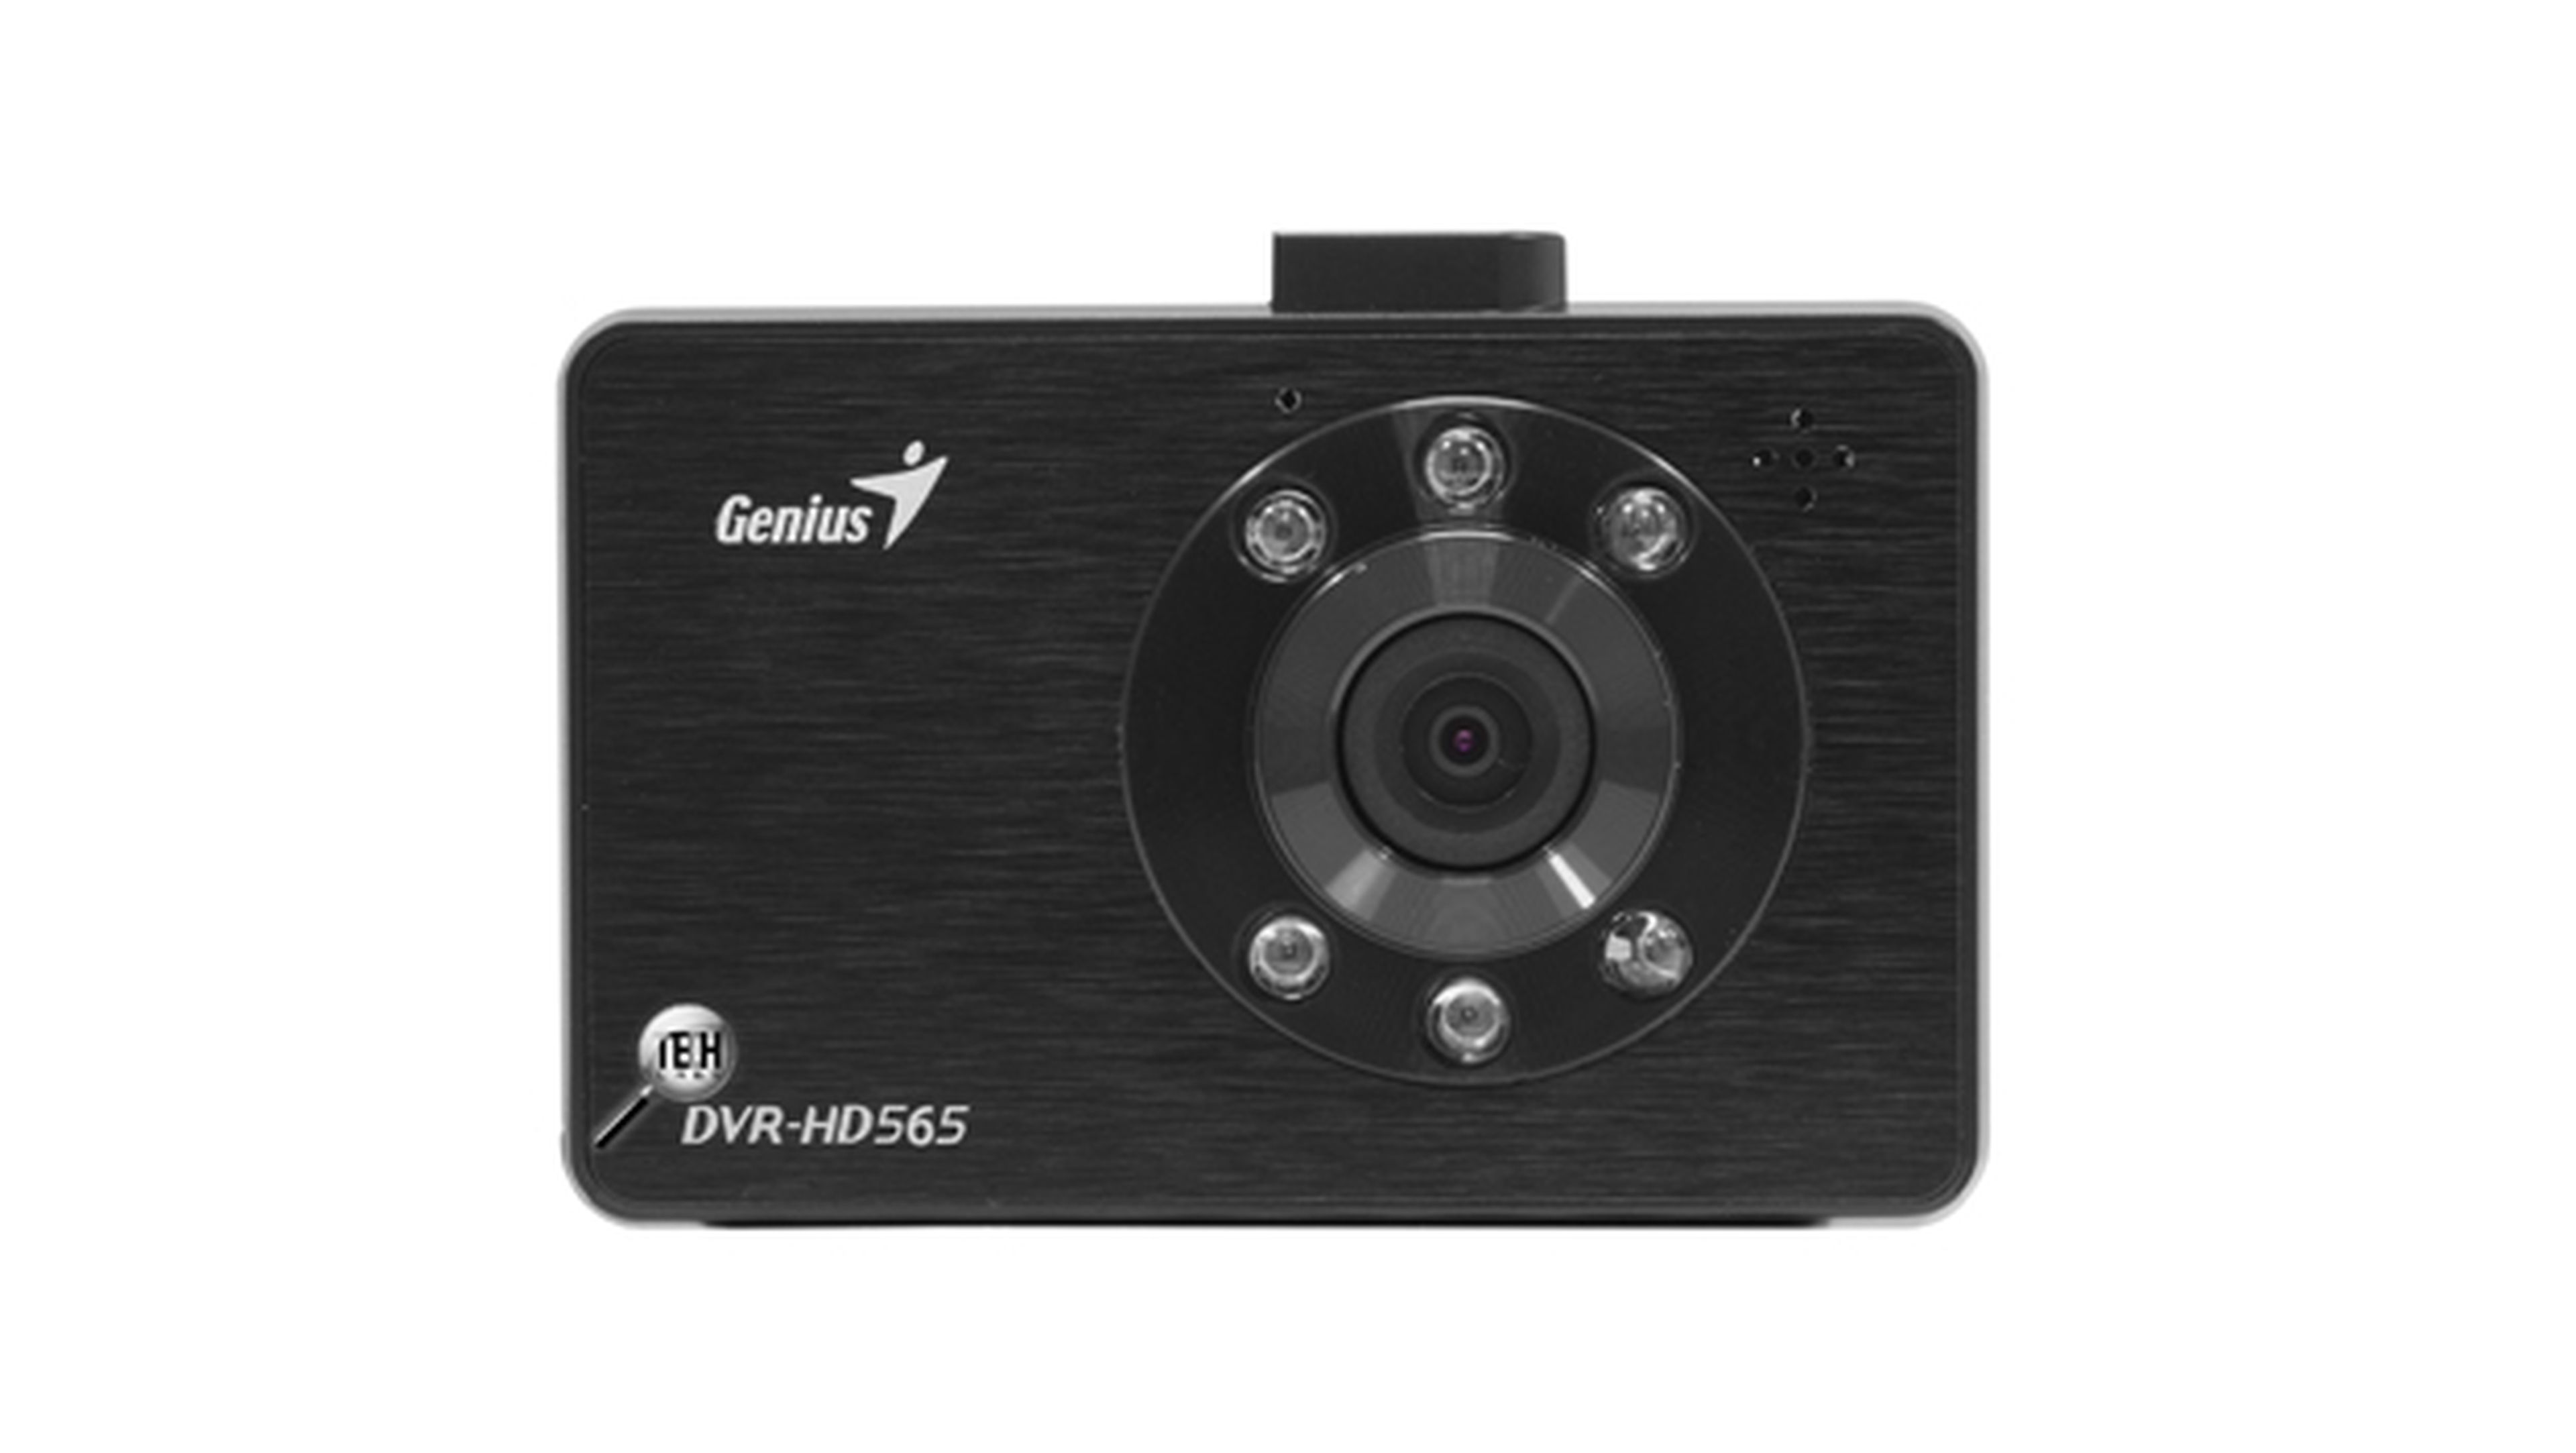 GENIUS DVR-HD565